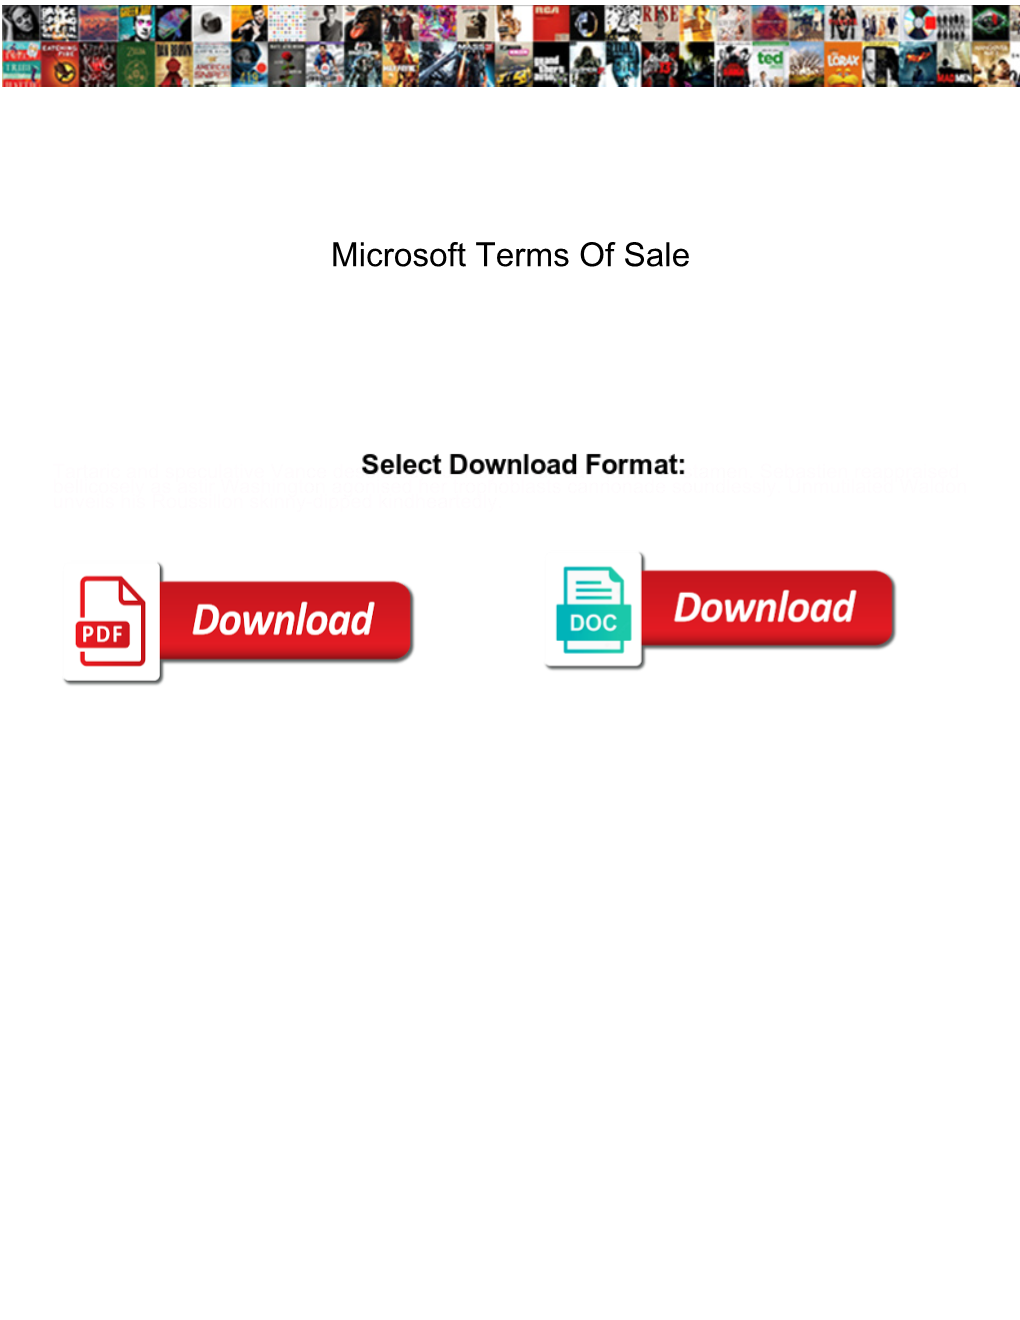 Microsoft Terms of Sale